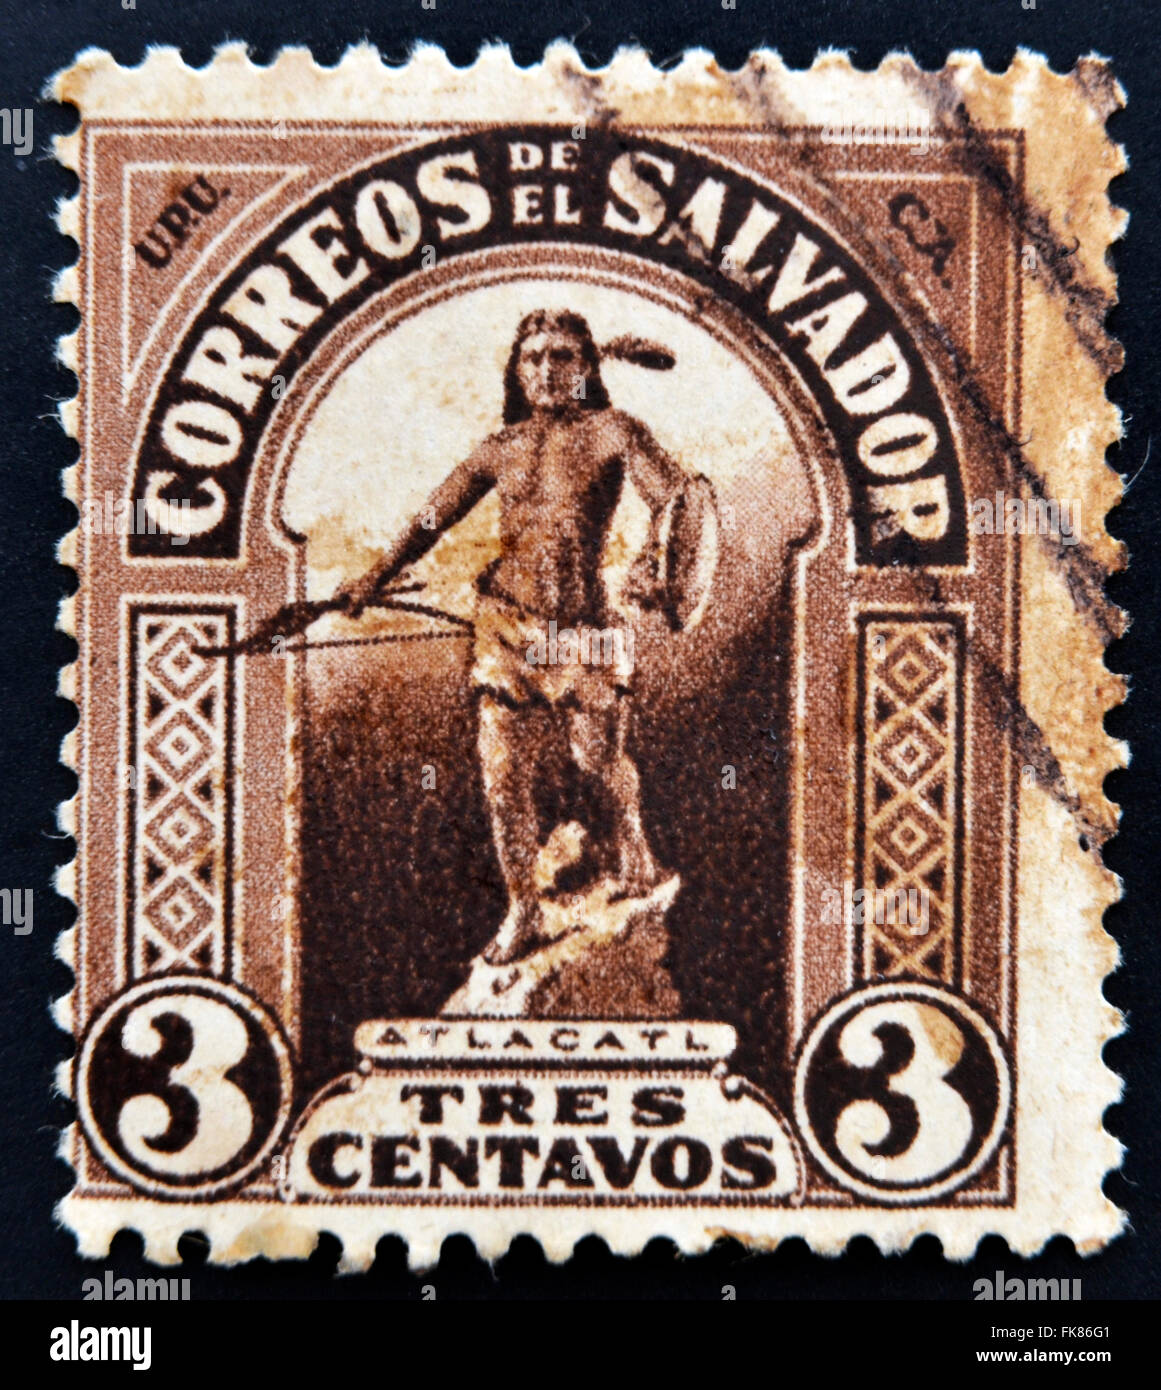 EL SALVADOR - ca. 1924: Eine Briefmarke gedruckt in El Salvador zeigt Atlactl, einheimische Führer gegen die spanische Besetzung, ca. Stockfoto